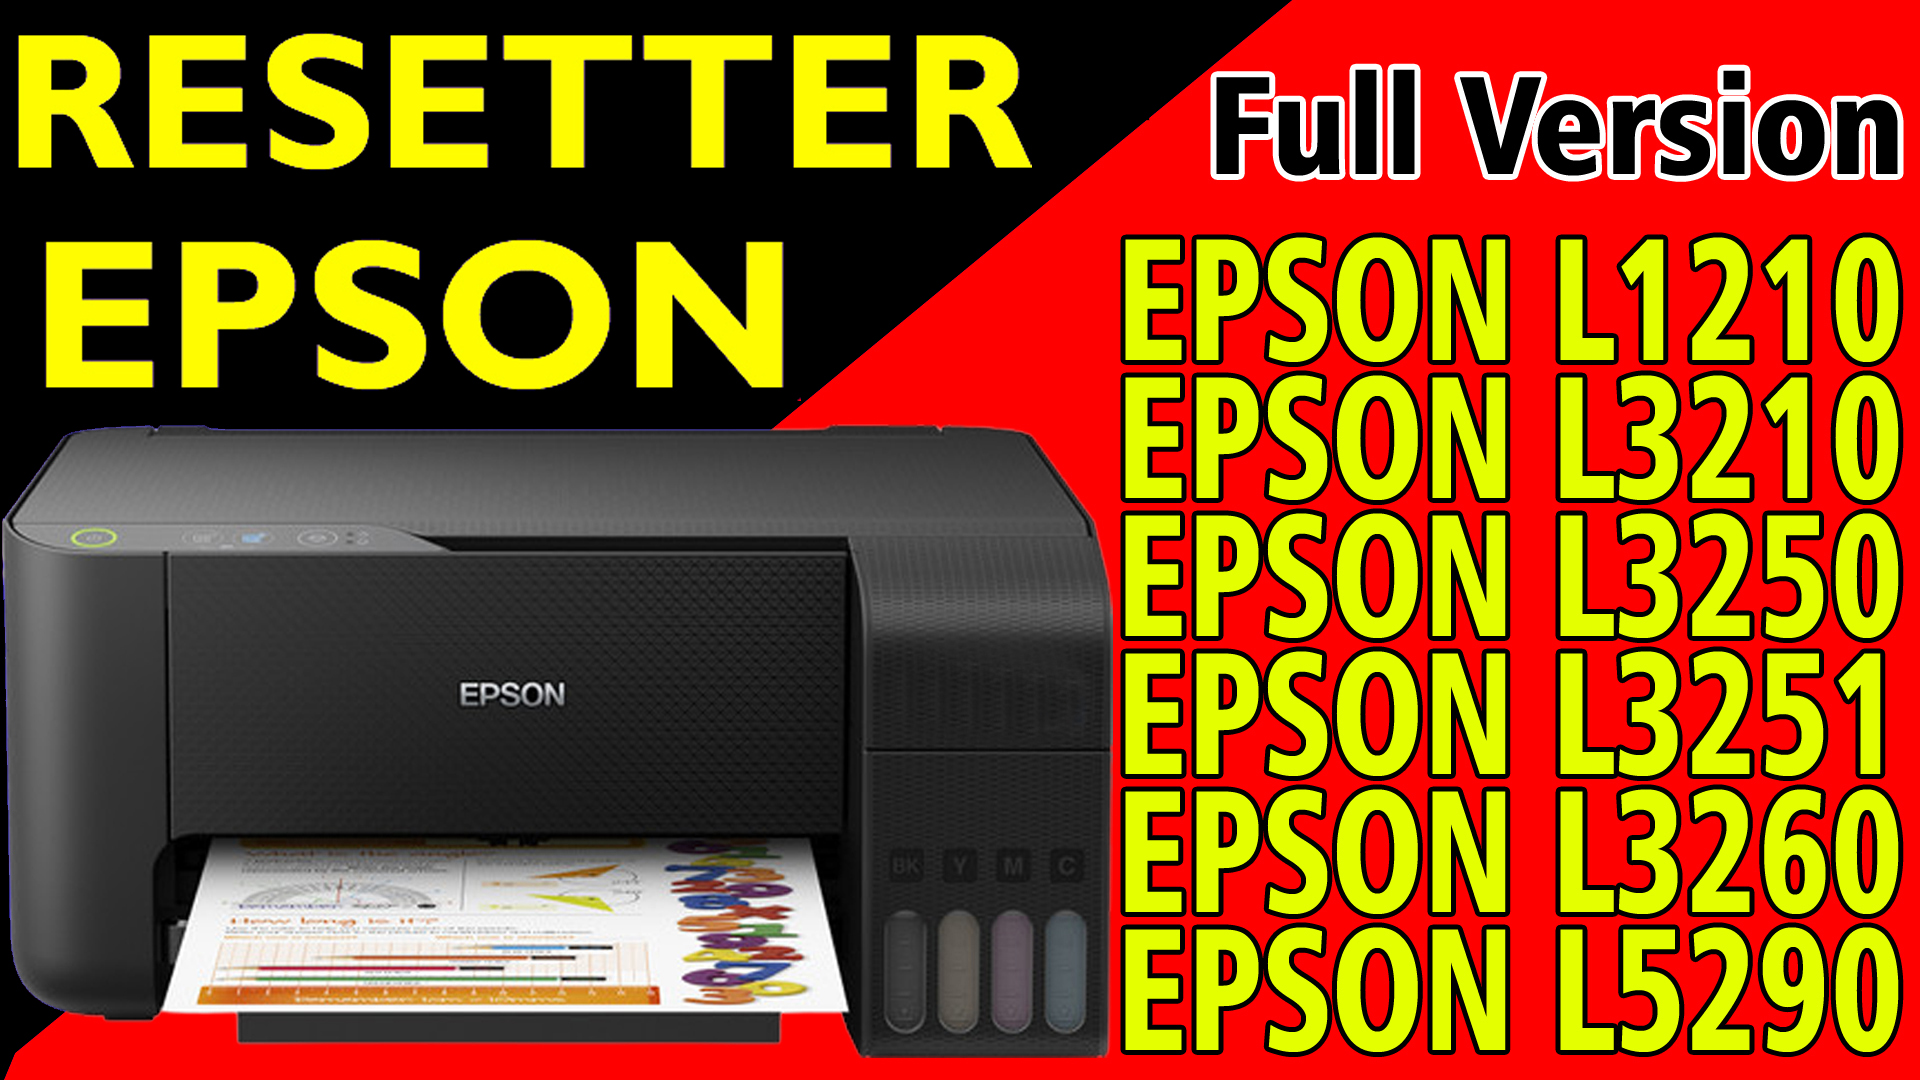 Epson l3250 driver free download